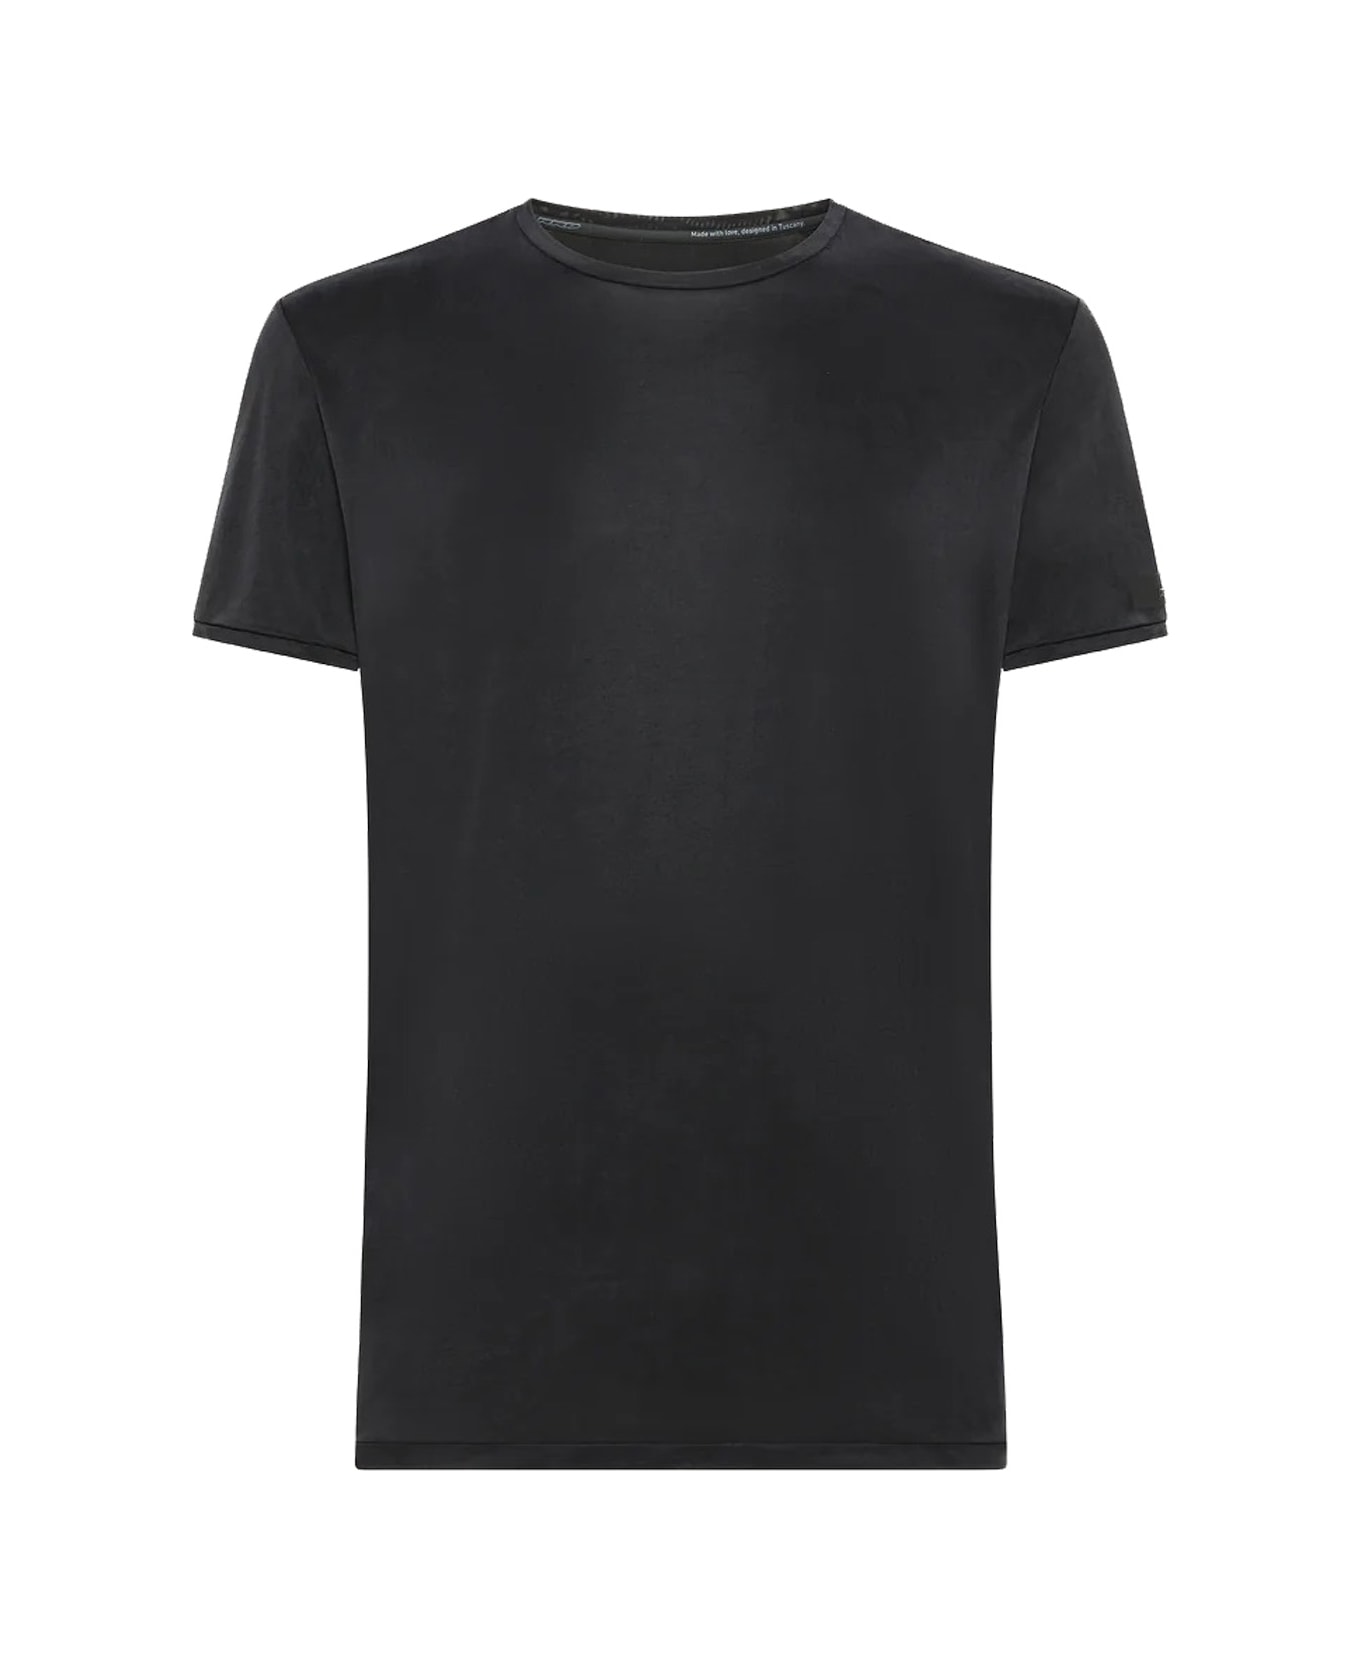 RRD - Roberto Ricci Design T-shirt - Black